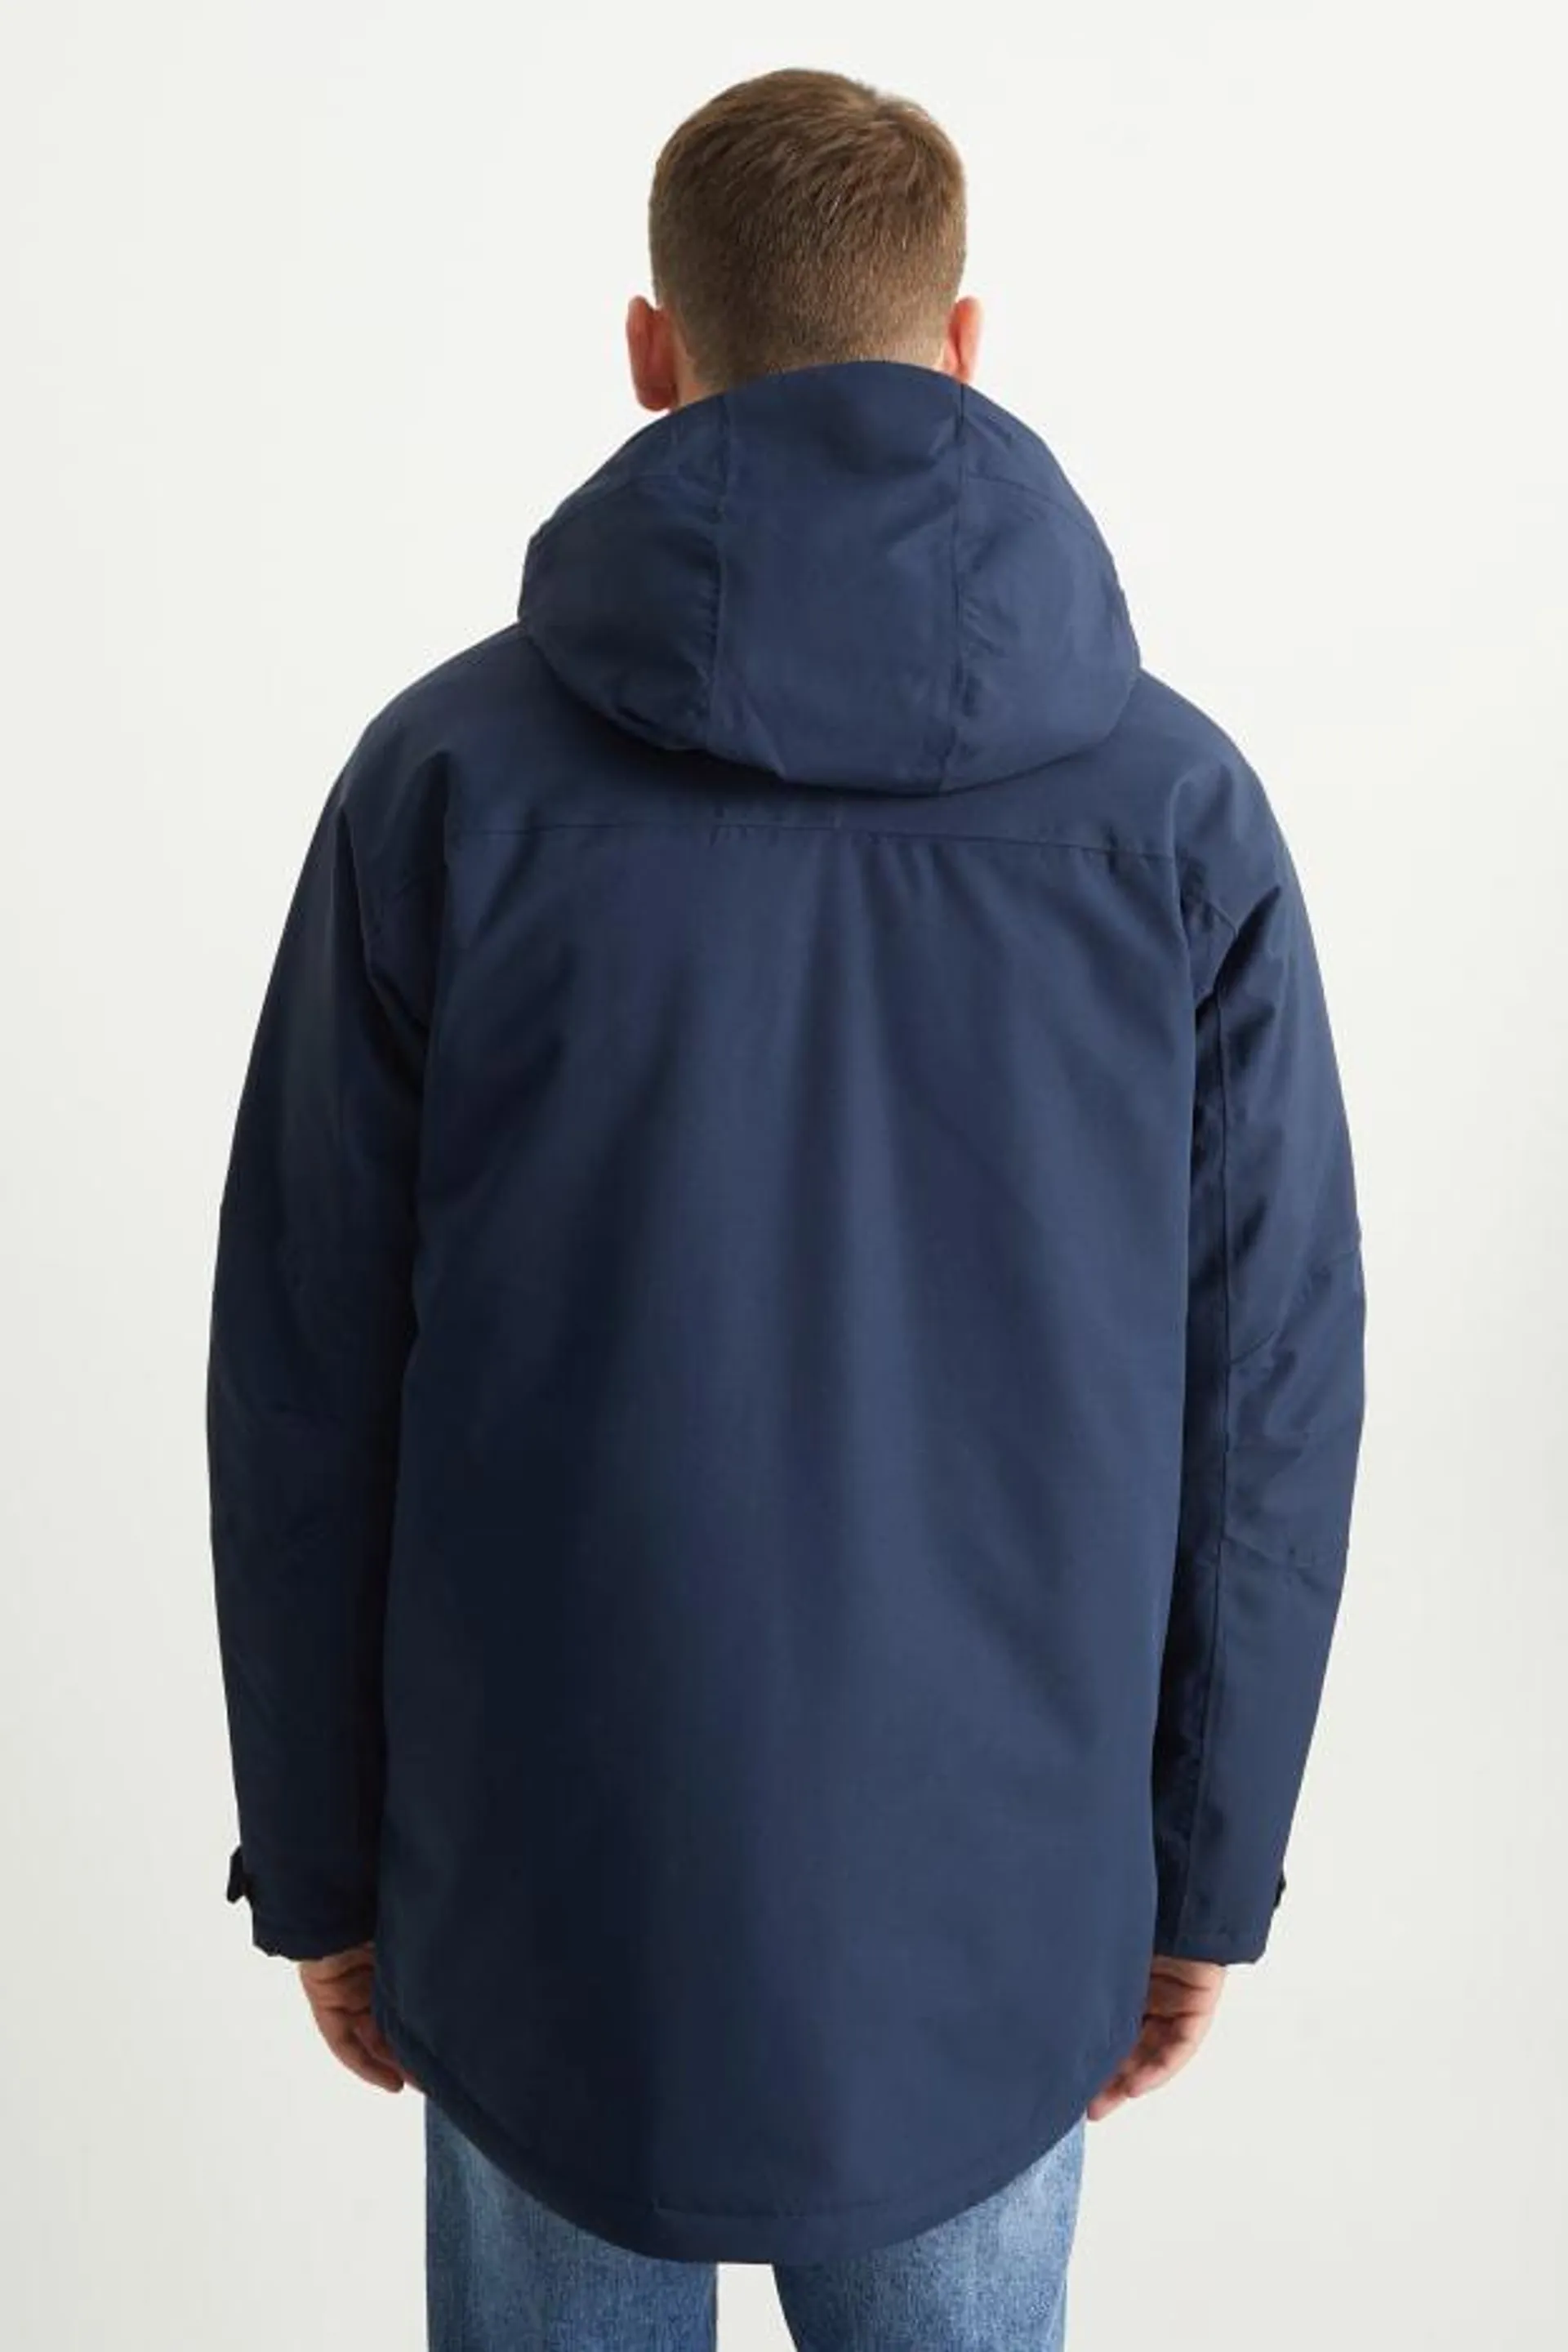 Outdoor jacket with hood